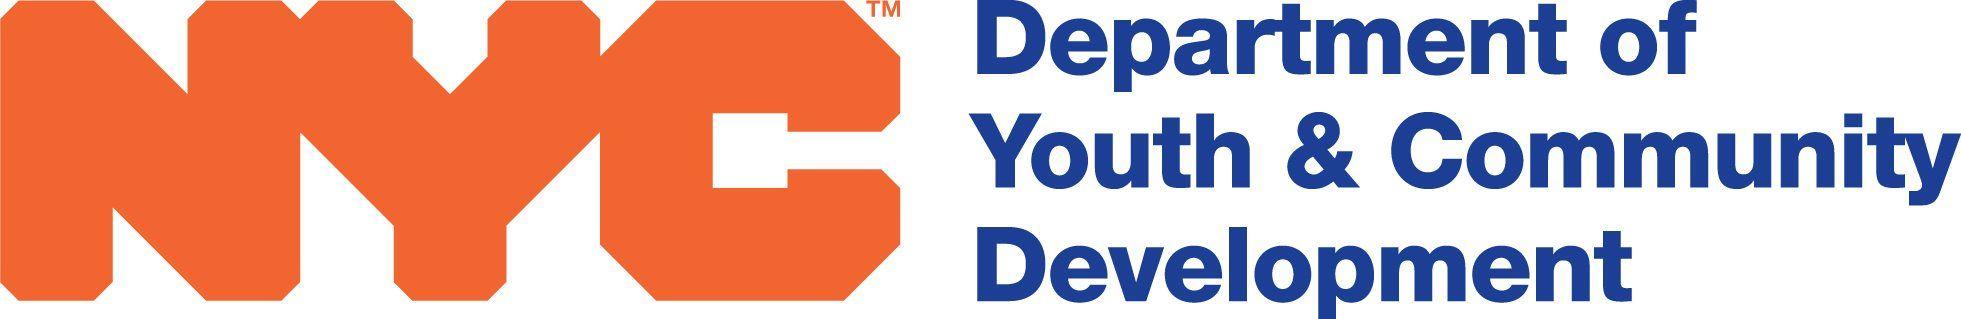 Dycd.com Logo - NYC DYCD logo final | CB14 Youth Conference 2019